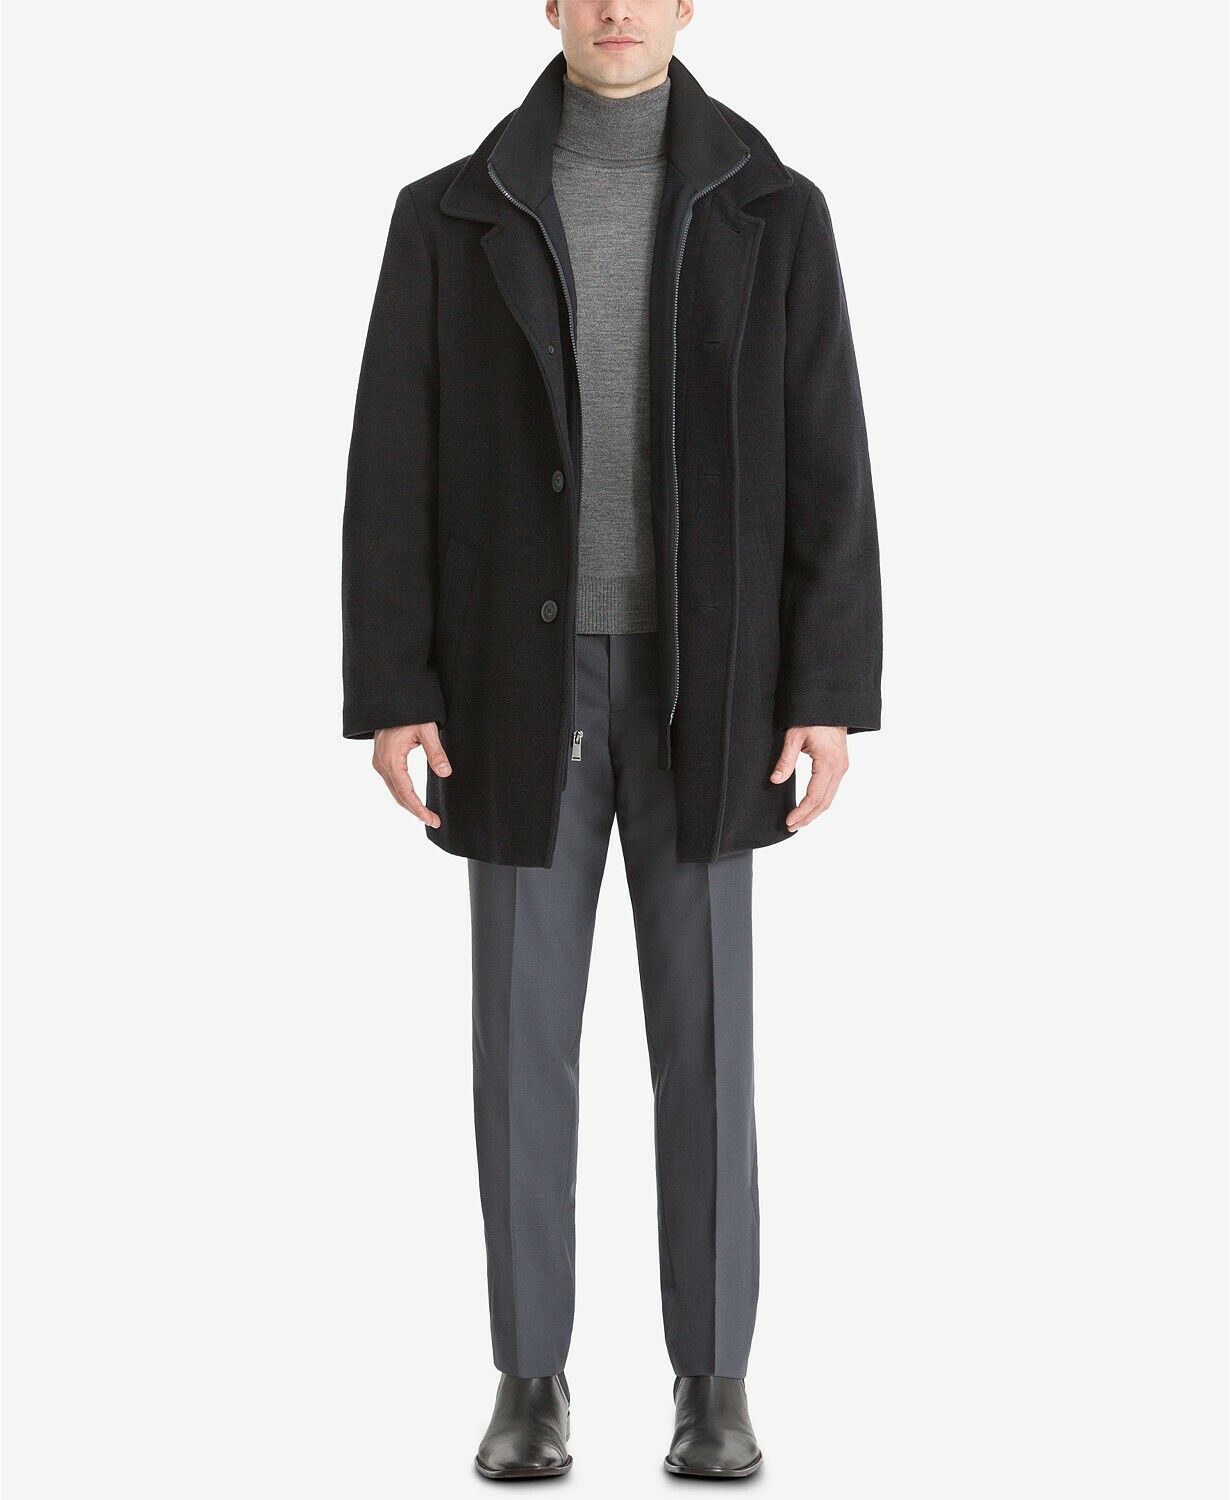 Calvin Klein Coleman Wool-Blend Overcoat in Black Size 48 Regular B8212  622362550544 | eBay